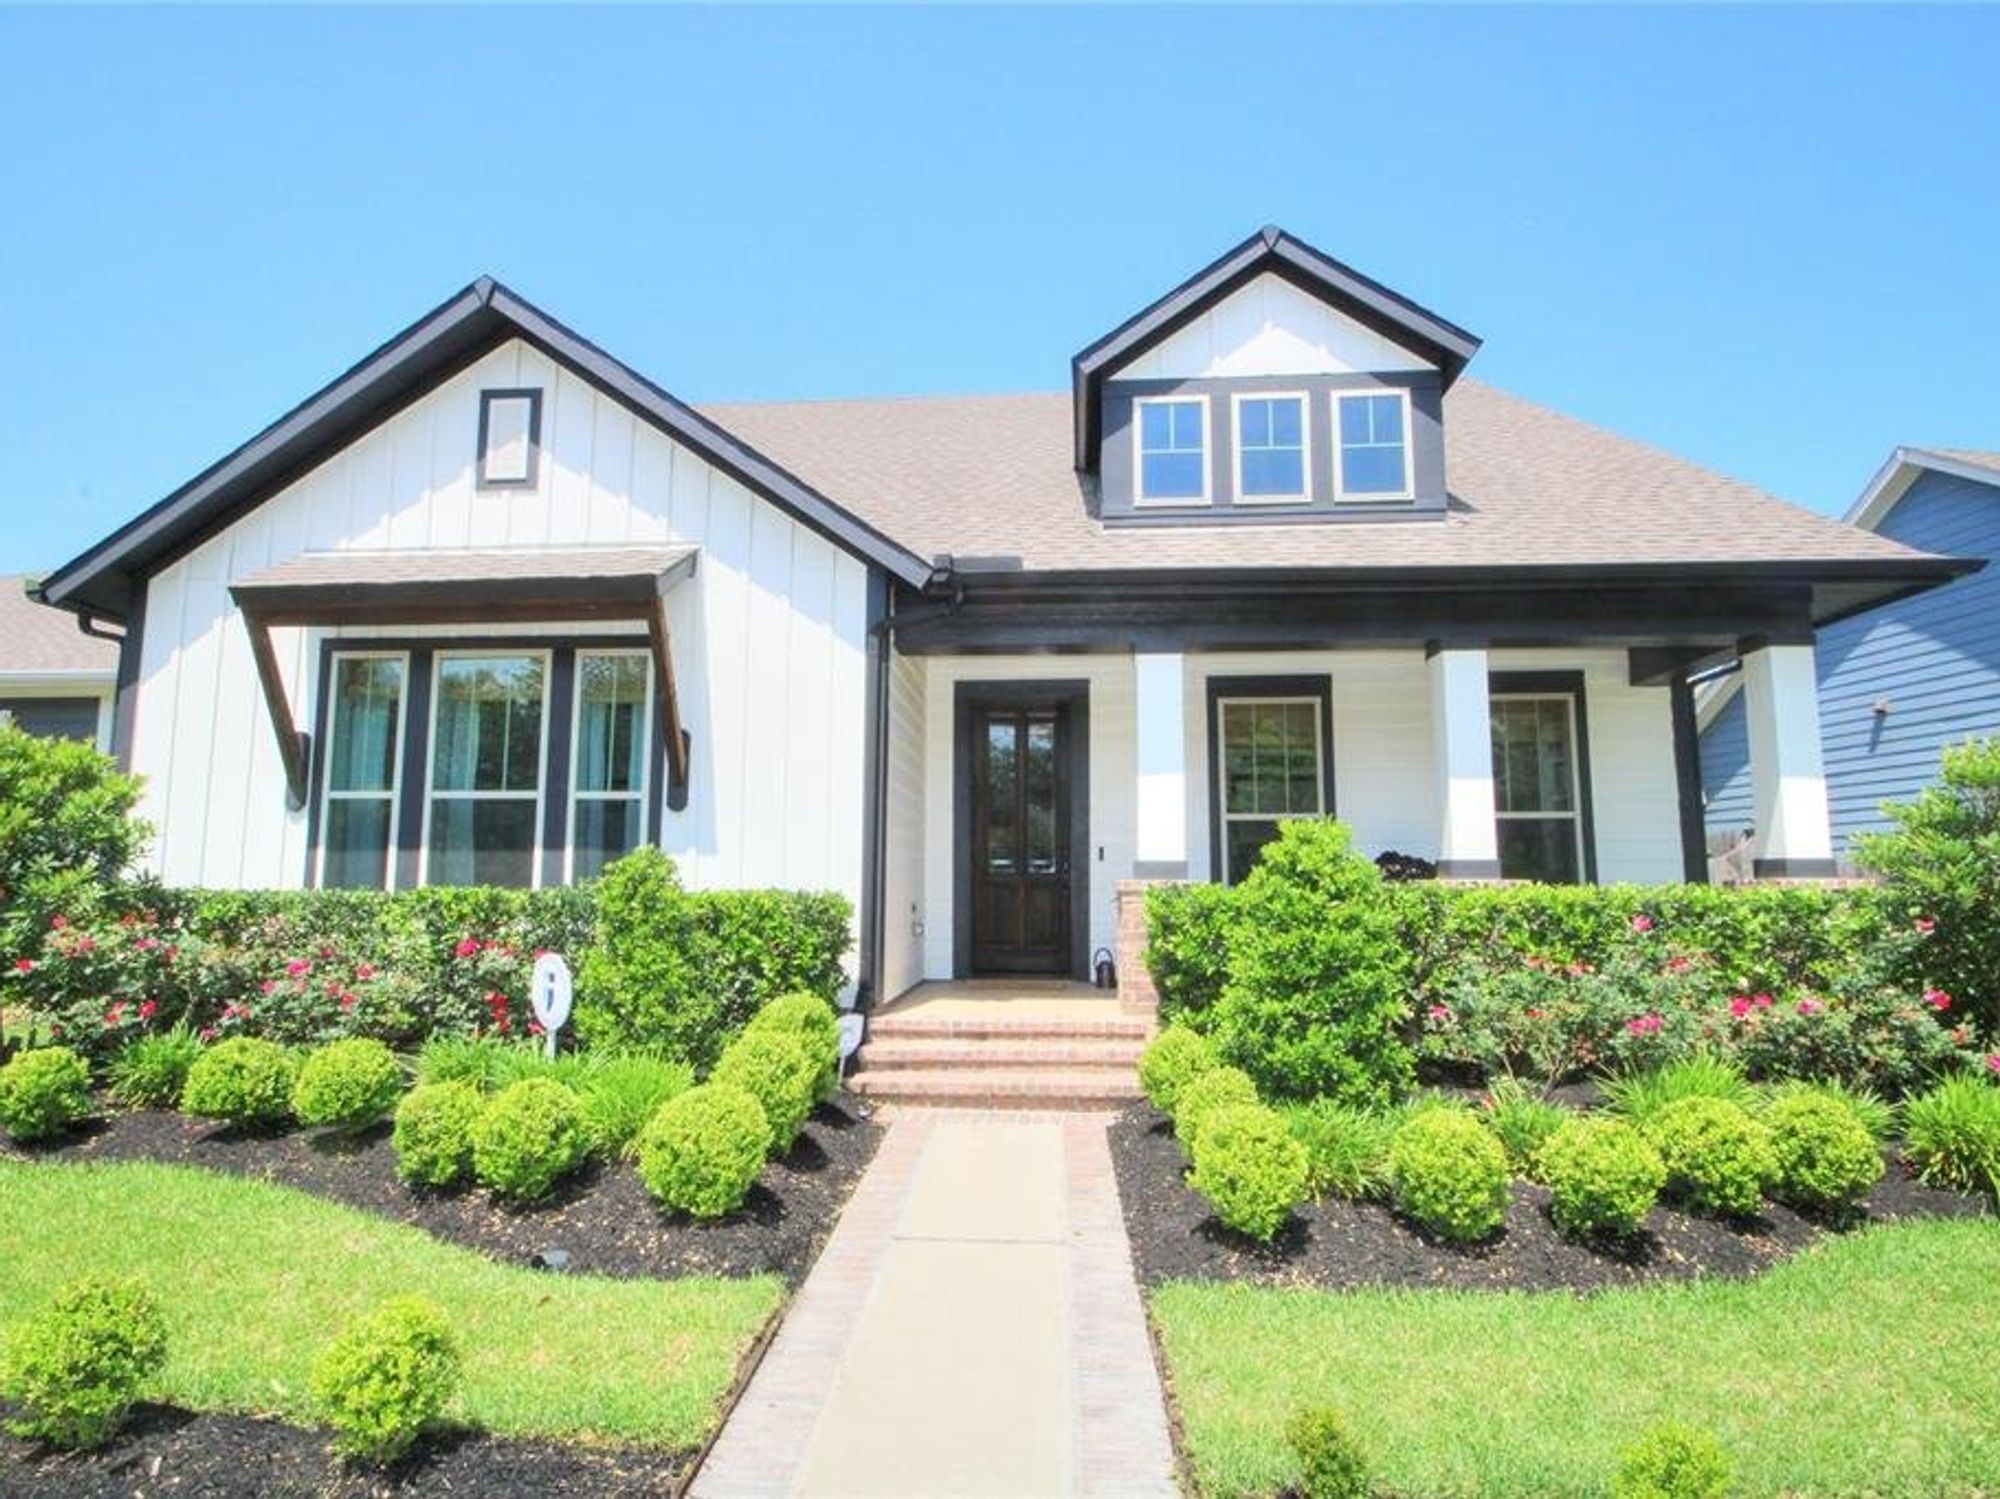 16815 Seminole Ridge Drive, Cypress home for sale, Houston home for sale